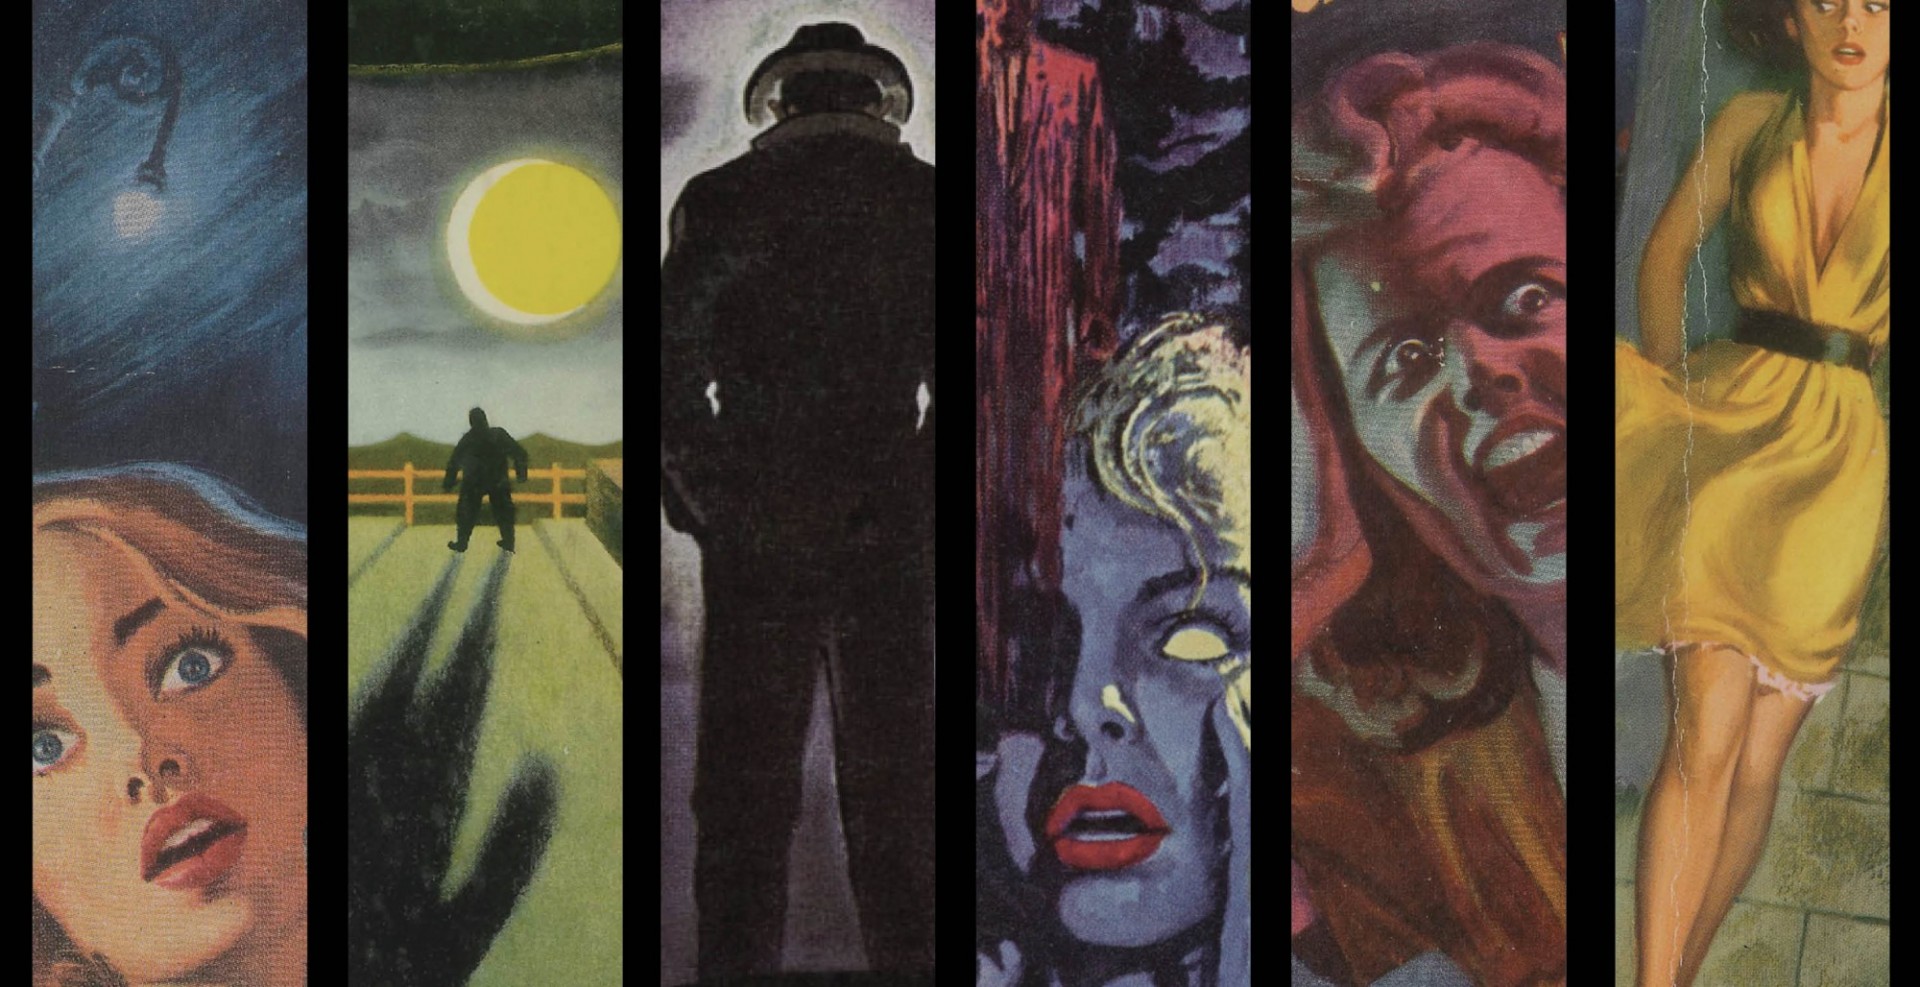 Illustrated scenes from several noir indie films.